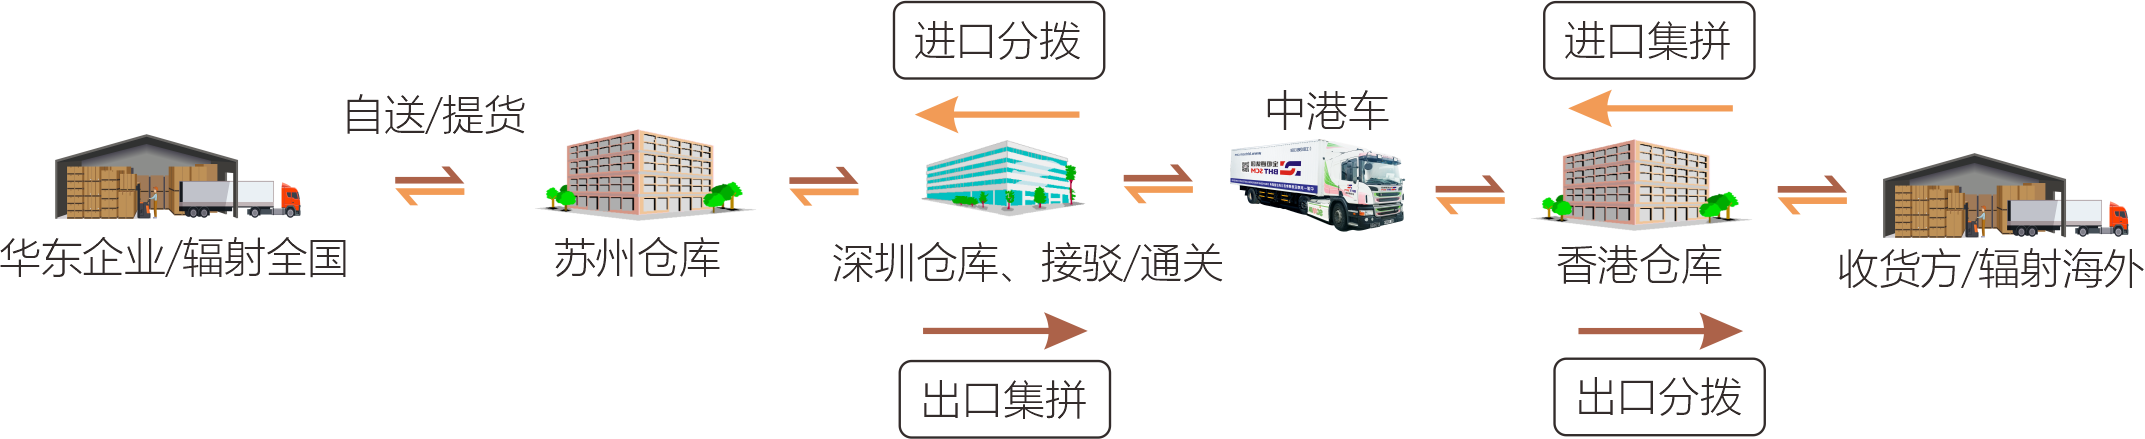 中港流程3.png